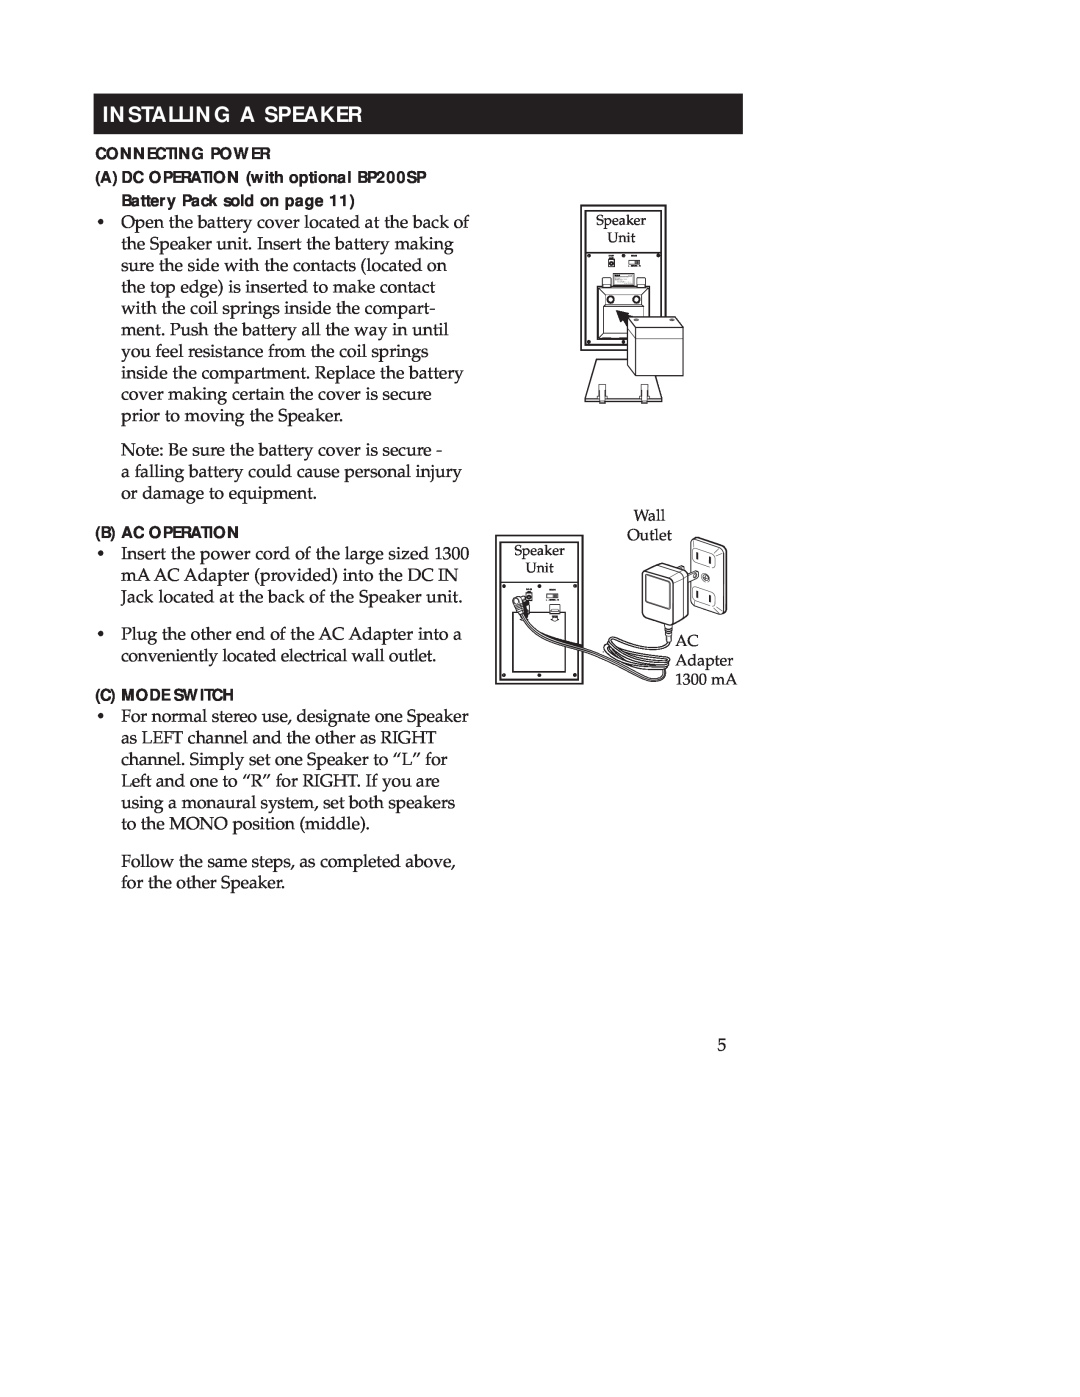 Samsung WSP200 manual Installing A Speaker 